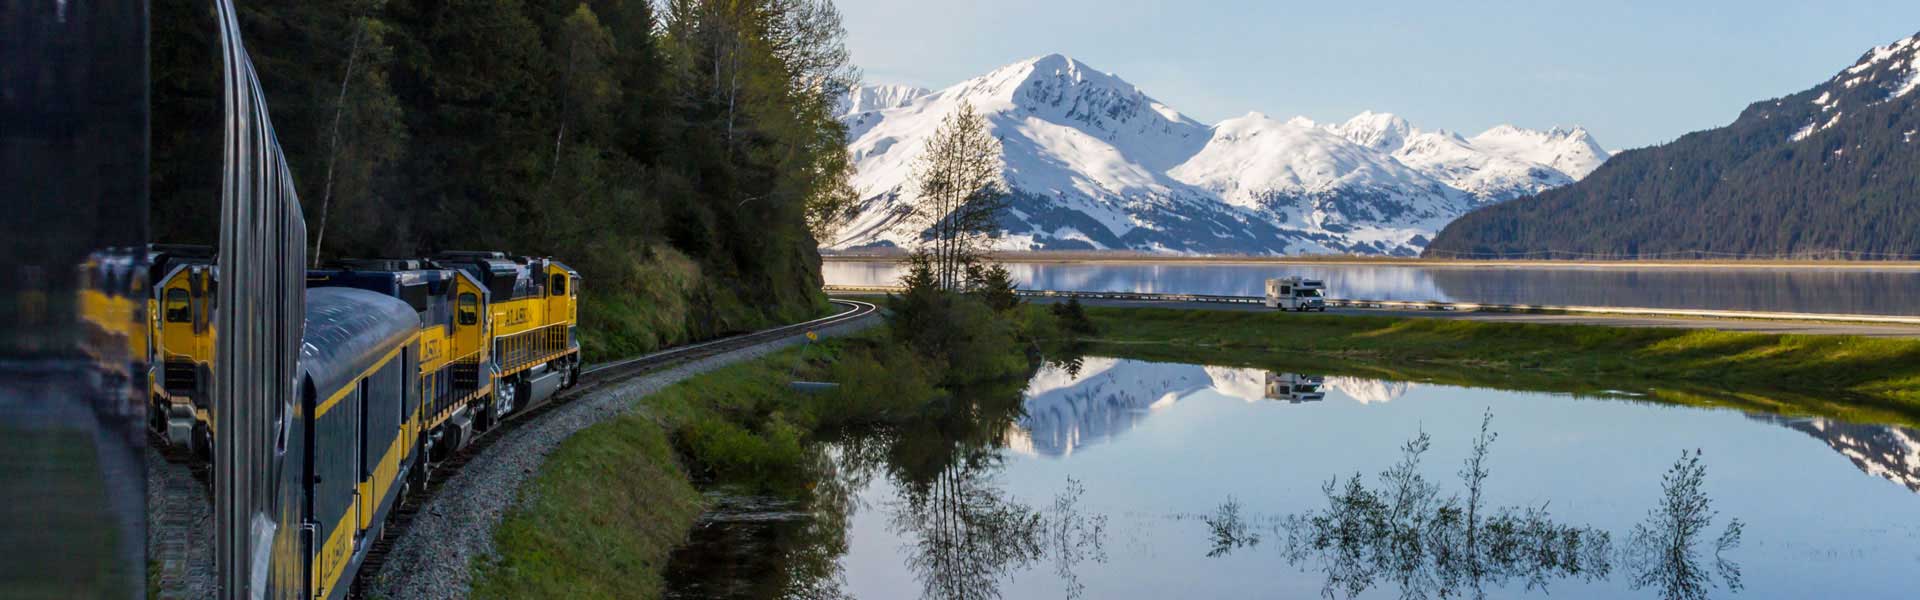 Alaska Train Trips, Tours & Vacation